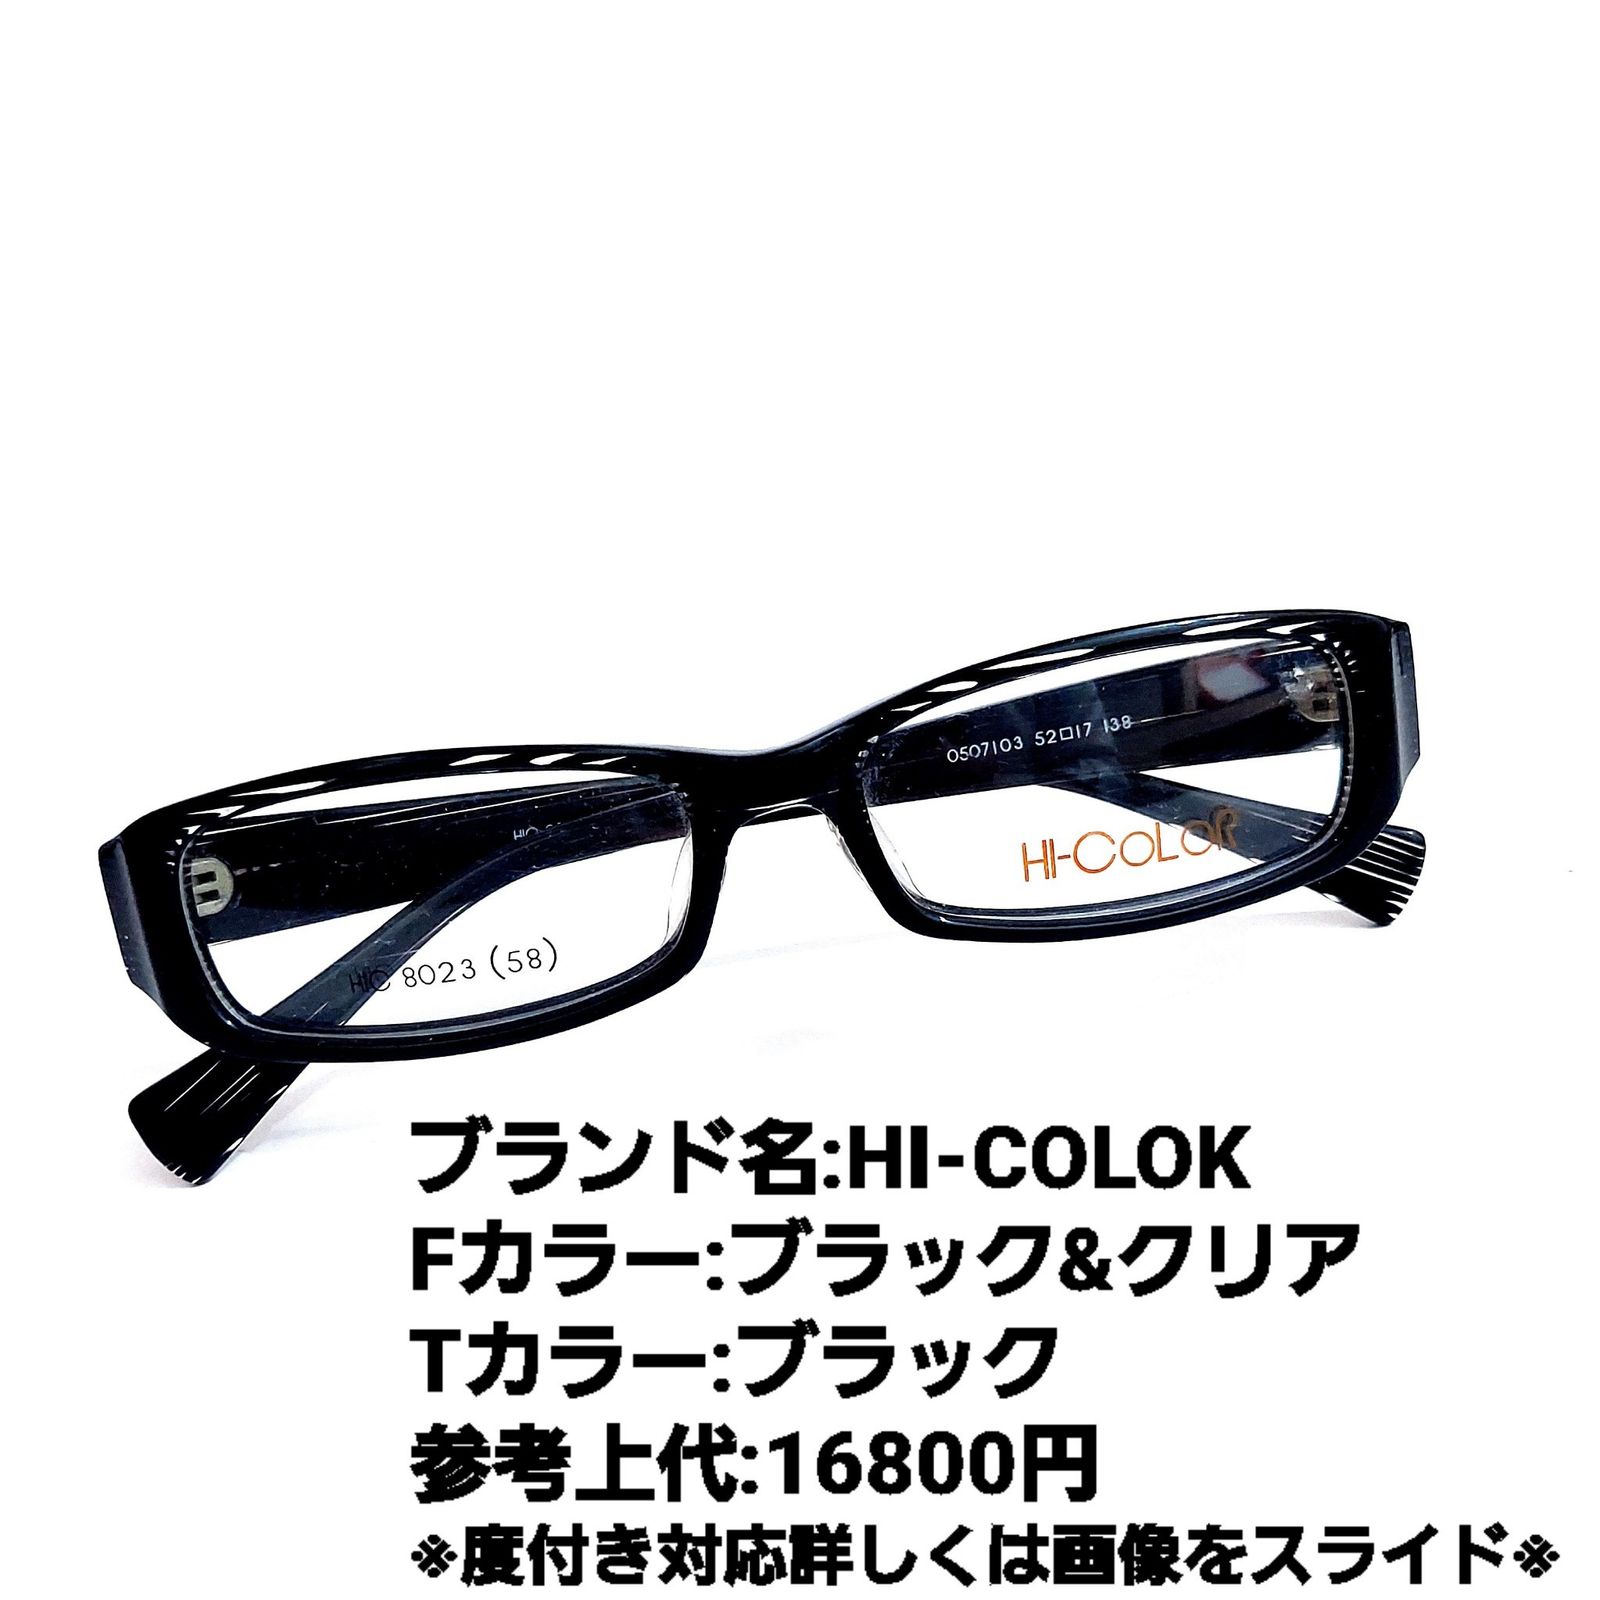 No.1254-メガネ HI-COLOK【フレームのみ価格】 | aluminiopotiguar.com.br